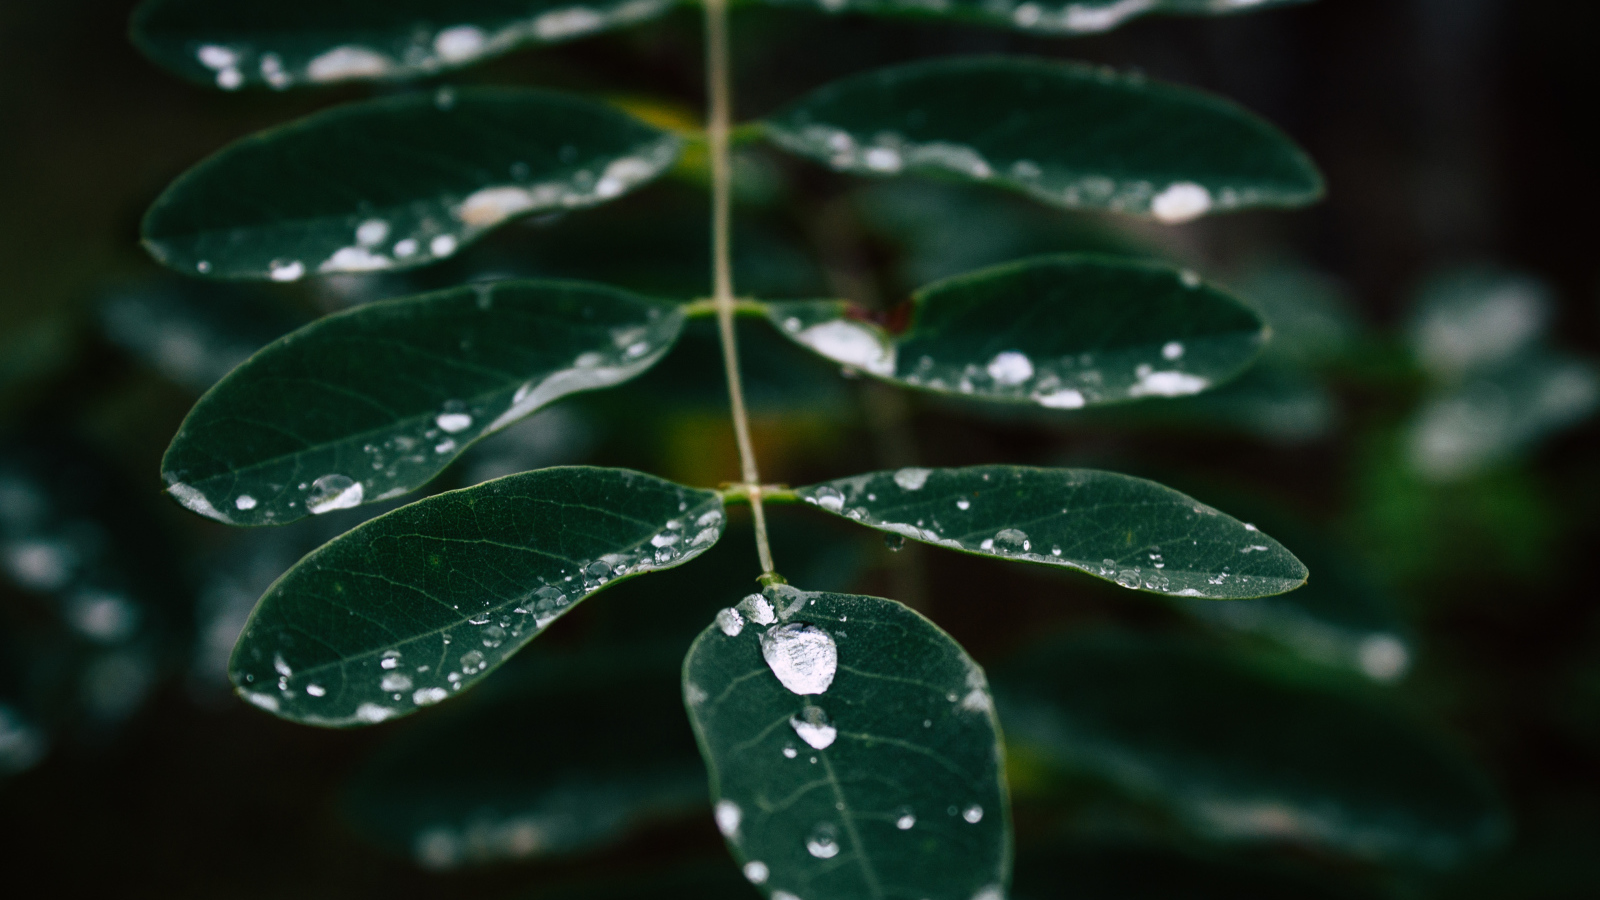 Drops of rain flow down the green leaf